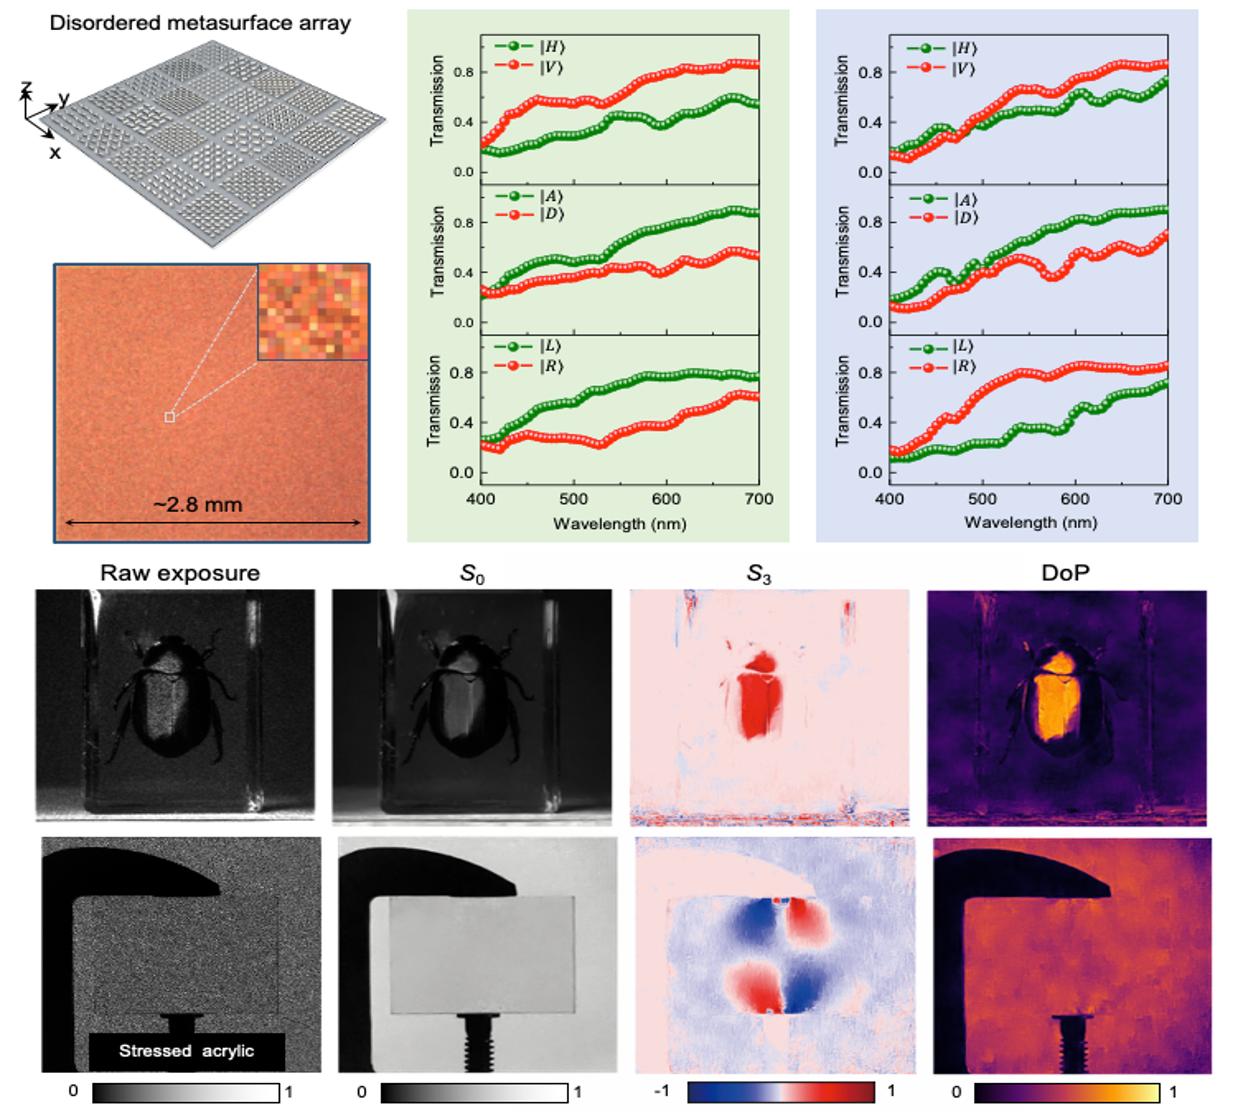 Disordered metasurface enabled single-shot full-Stokes polarization imaging leveraging weak dichroism|2023 Nature Communication